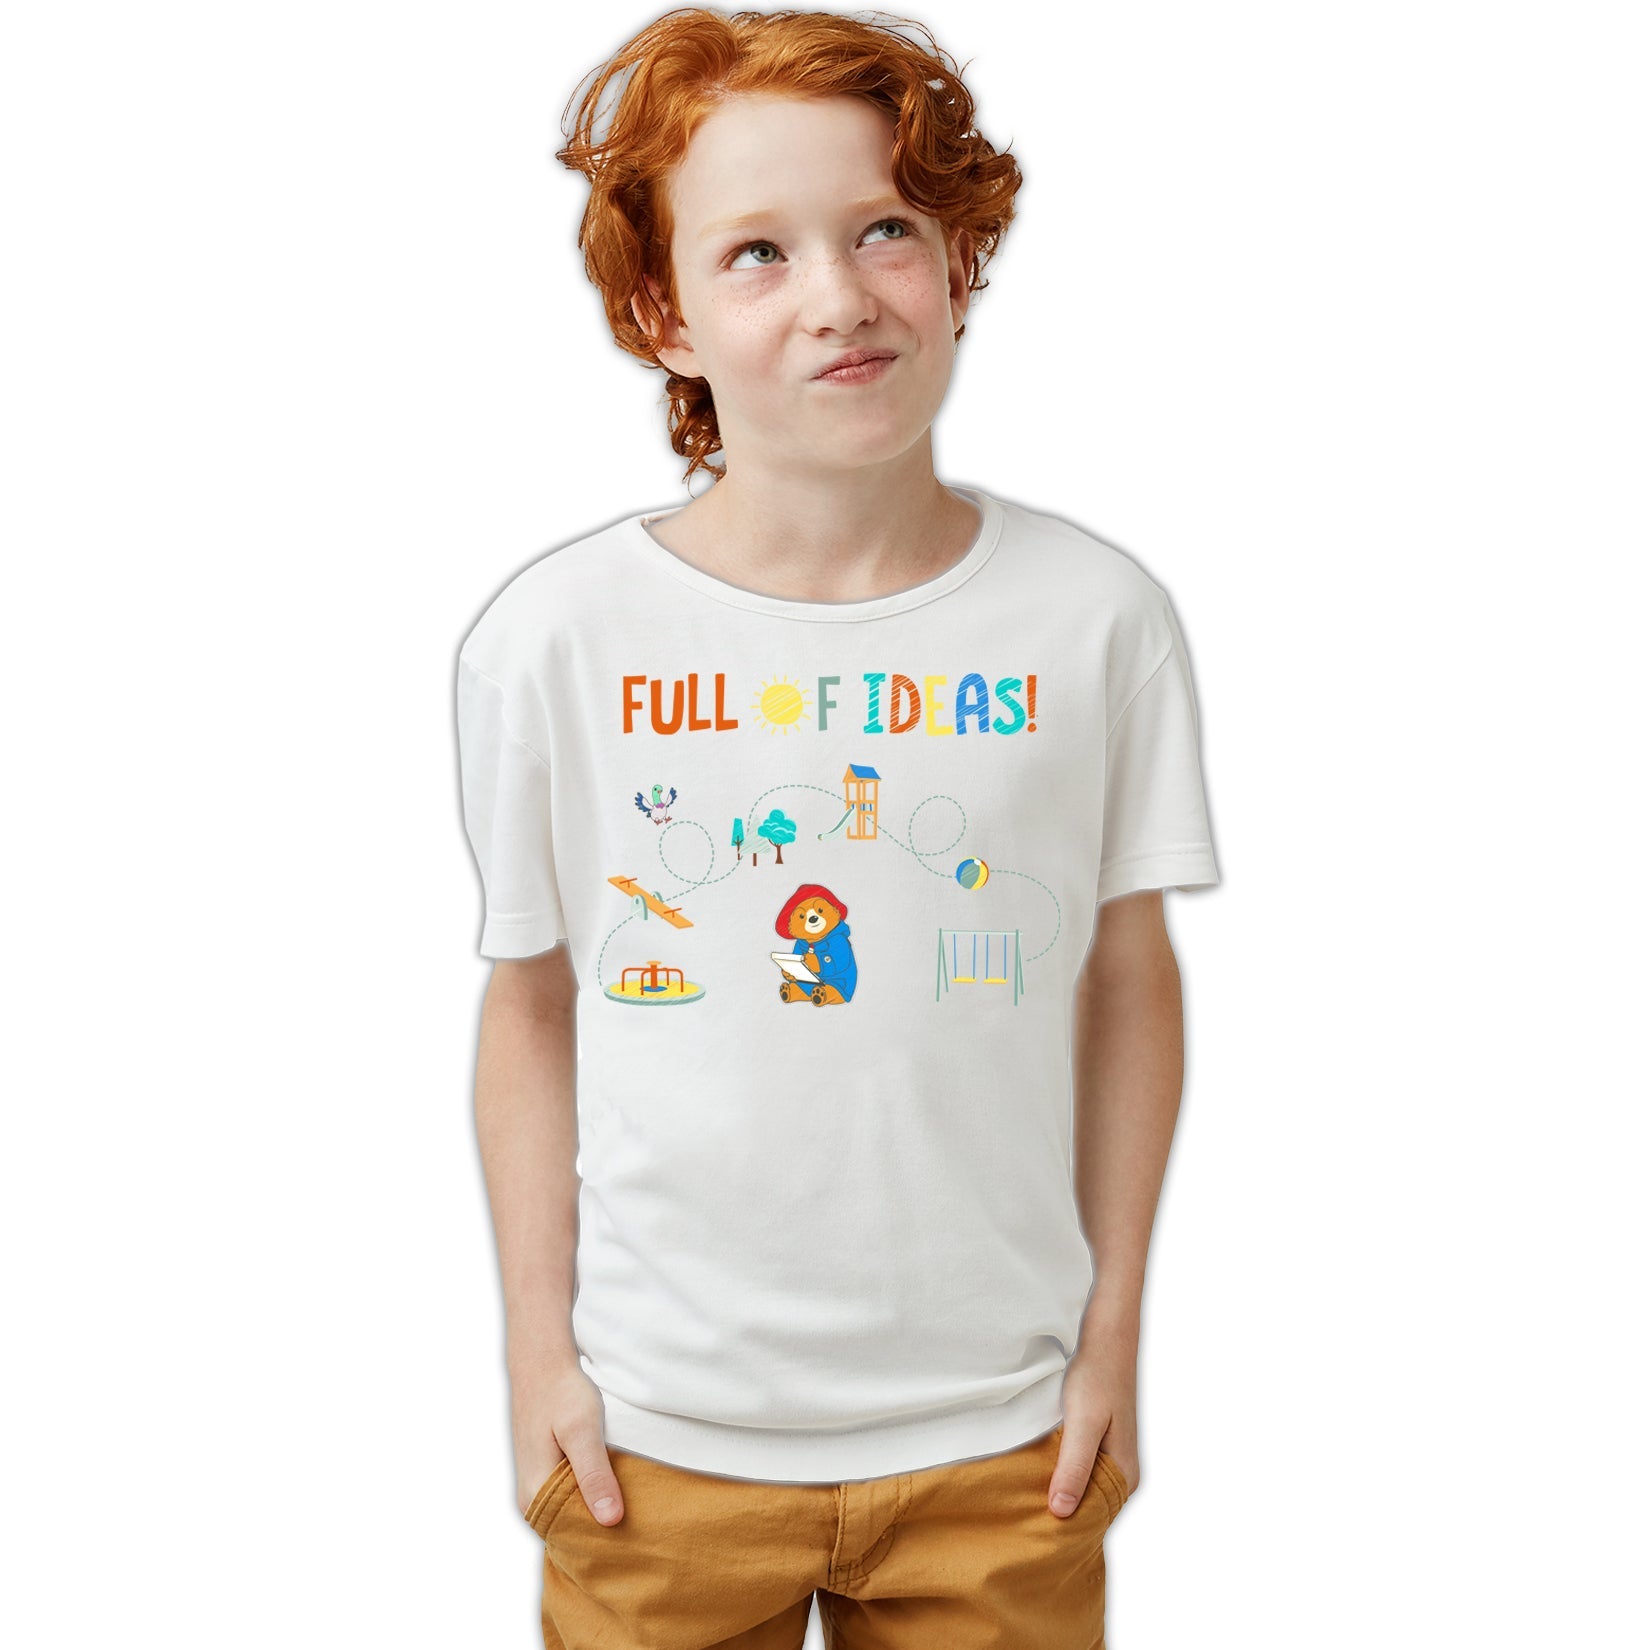 Paddington Bear Adventures Full of Ideas Official Youth T-Shirt